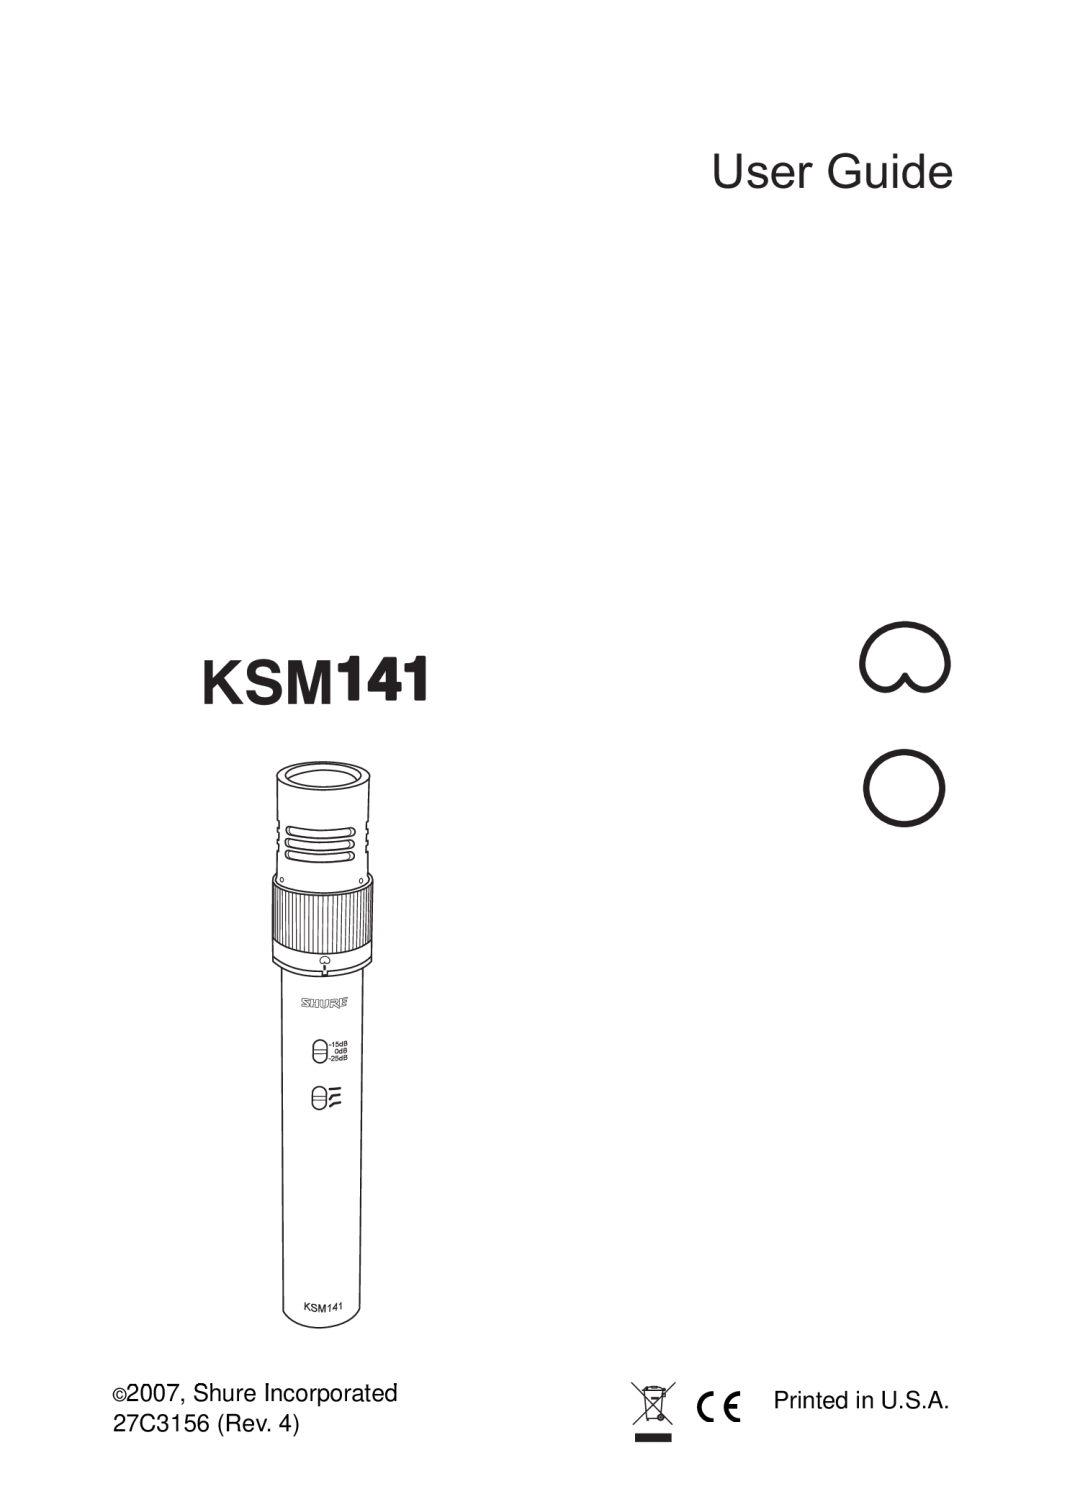 Shure KSM141 manual User Guide, E2003, Shure Incorporated, 27B3156 CE 